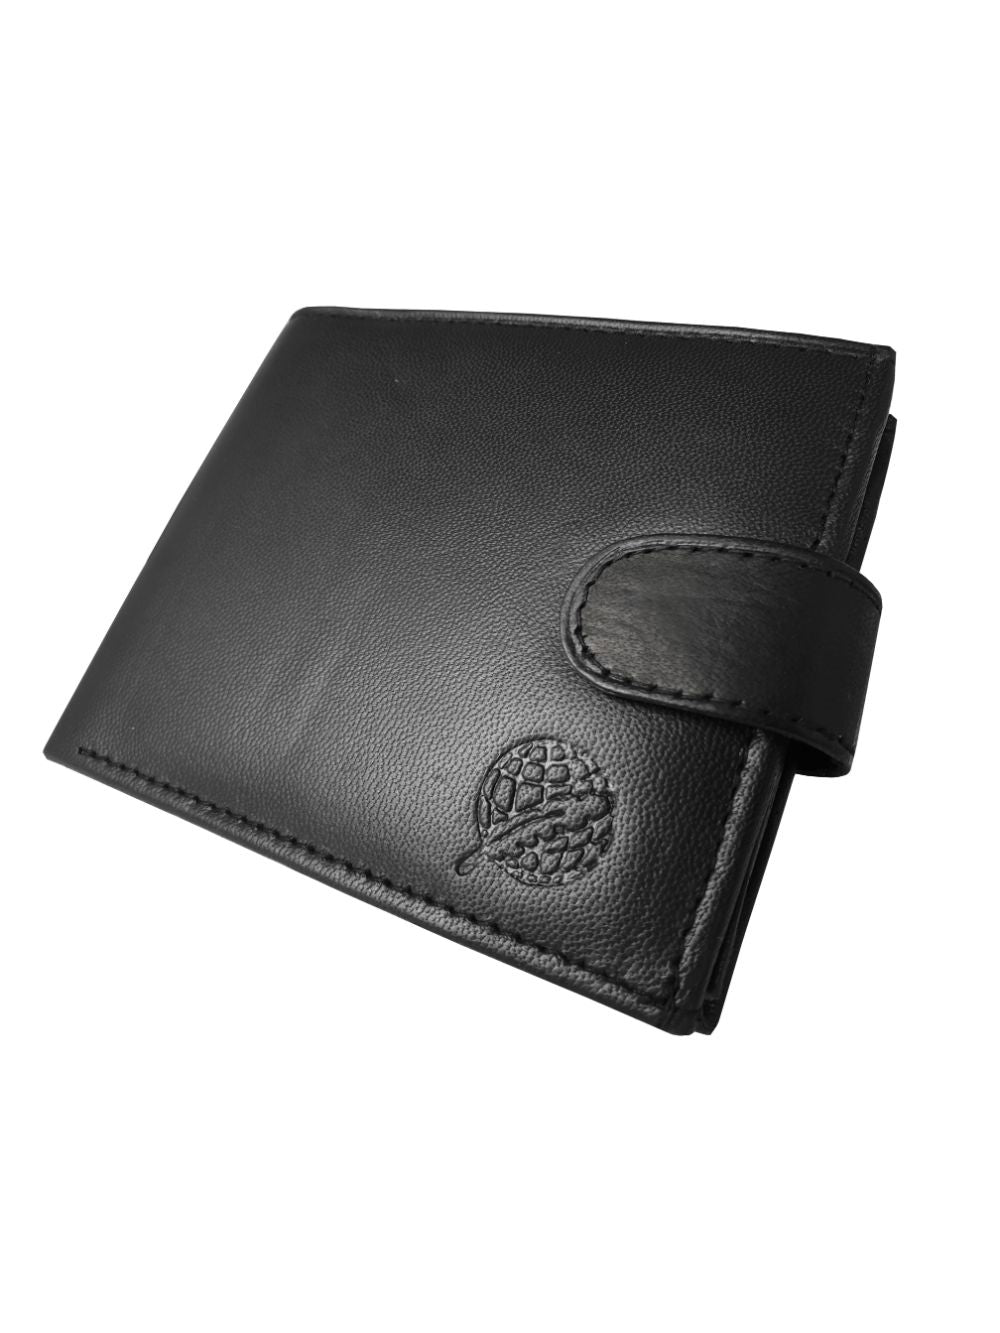  Roamlite Mens chained wallet black leather rl506 side